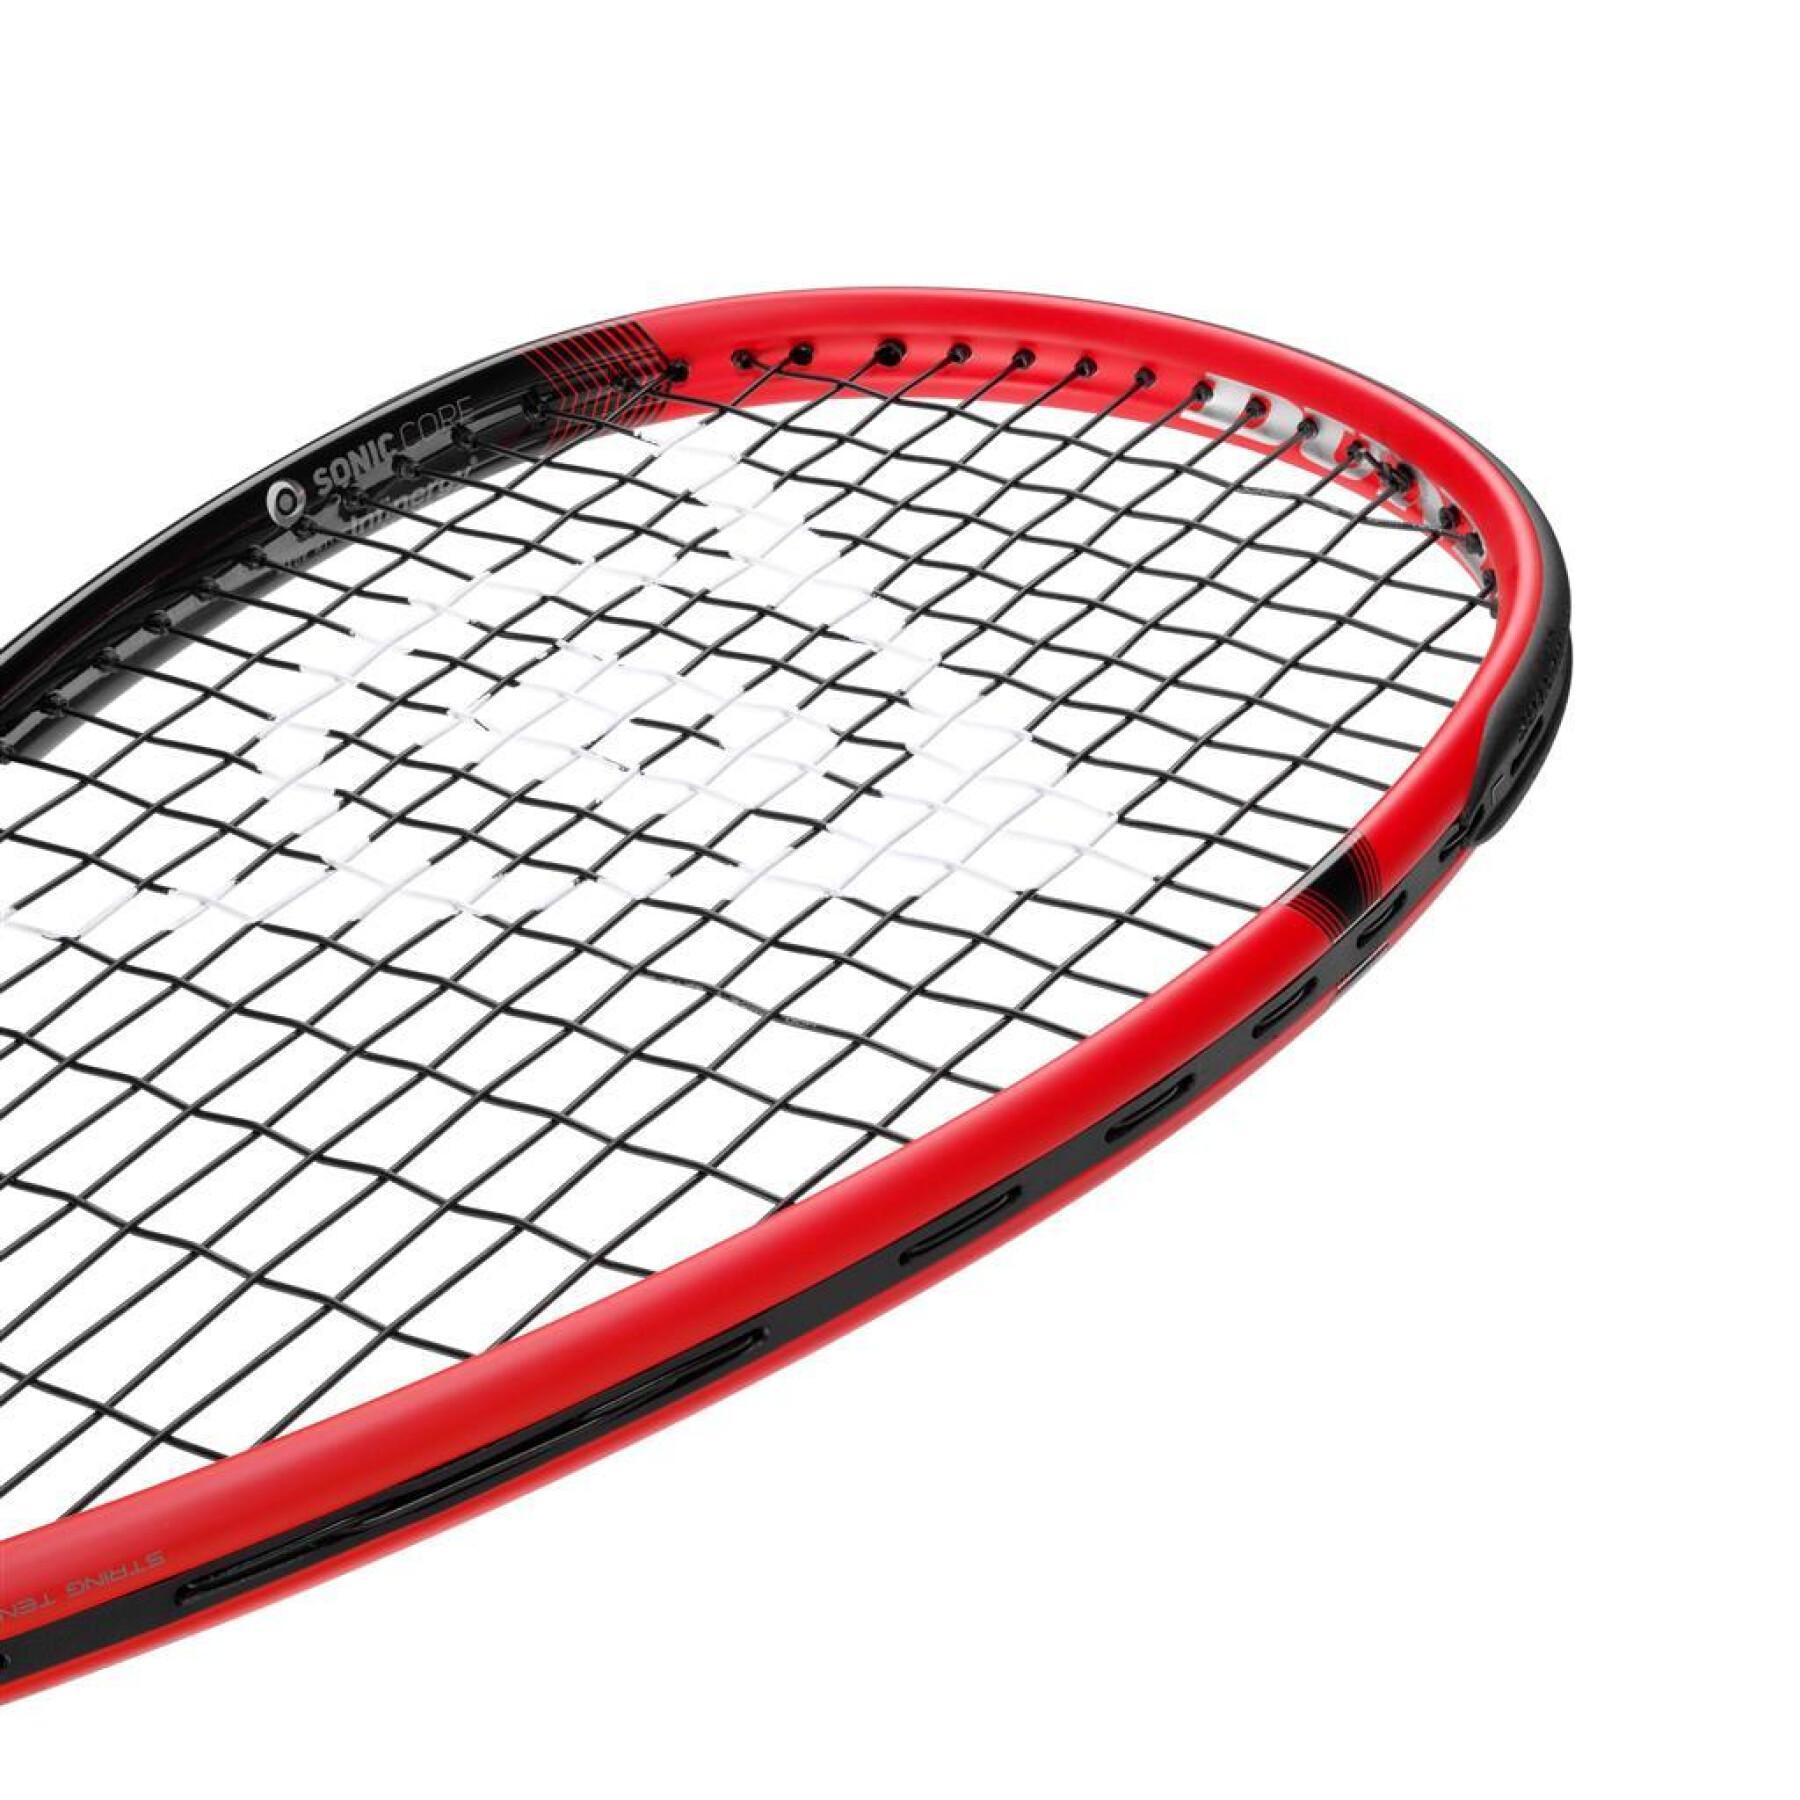 Children's squash racket Dunlop Soniccore Revelation 135